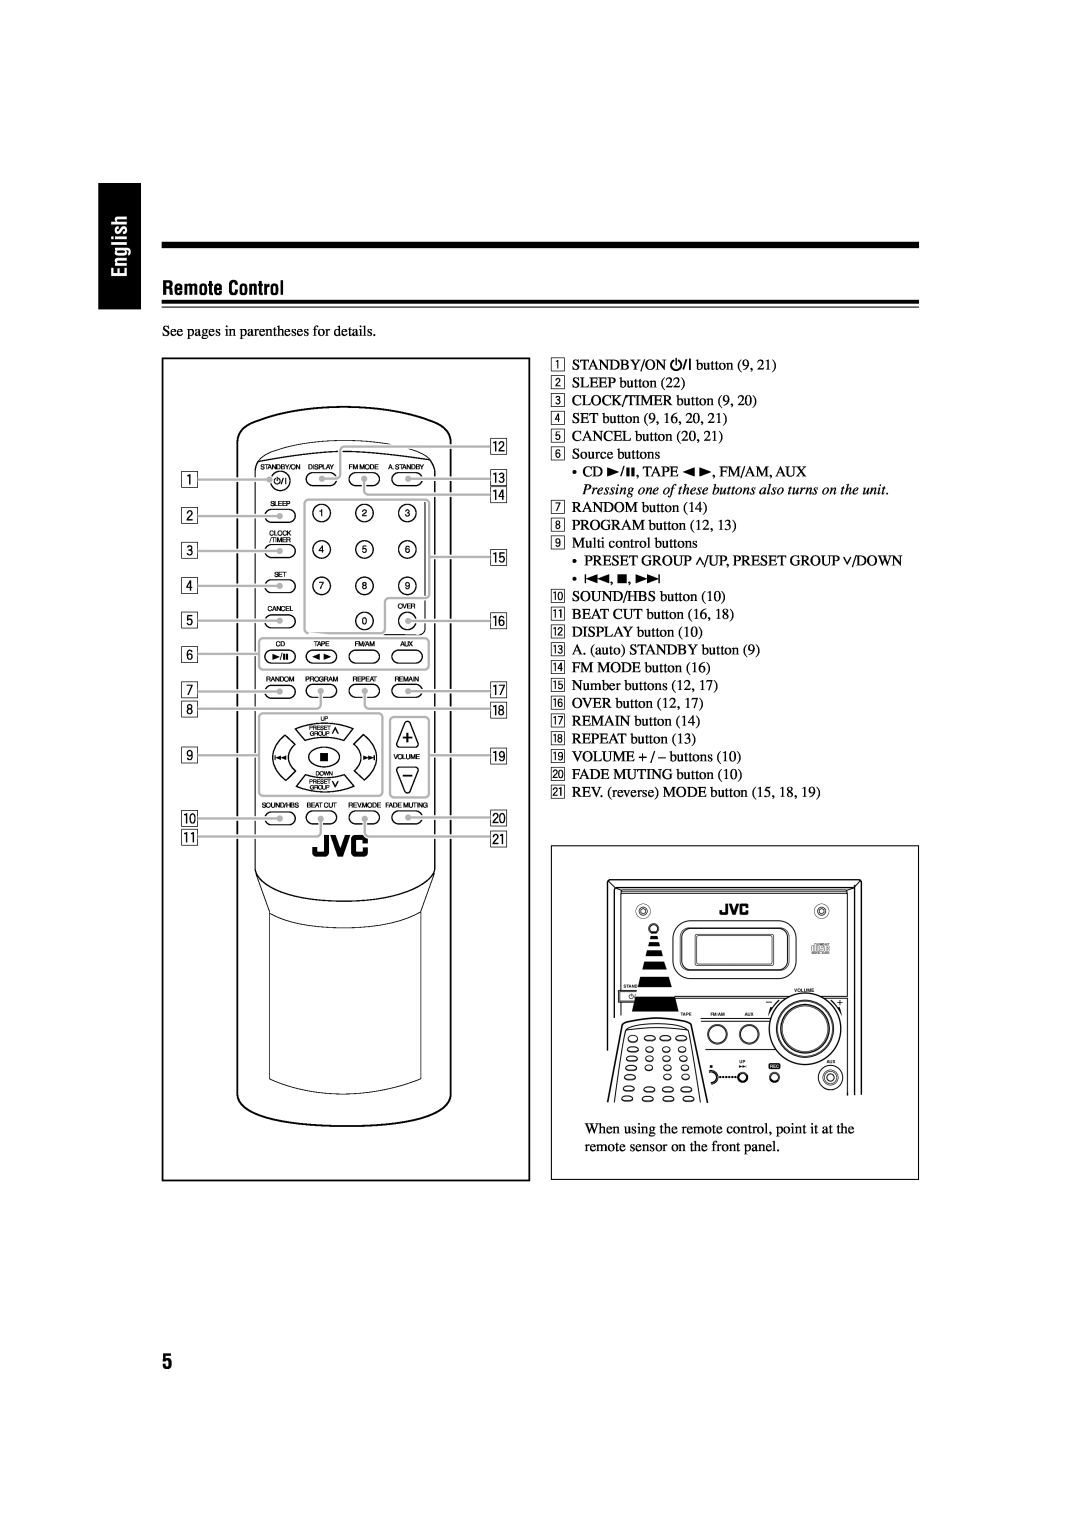 JVC LVT1364-006B manual English, Remote Control 